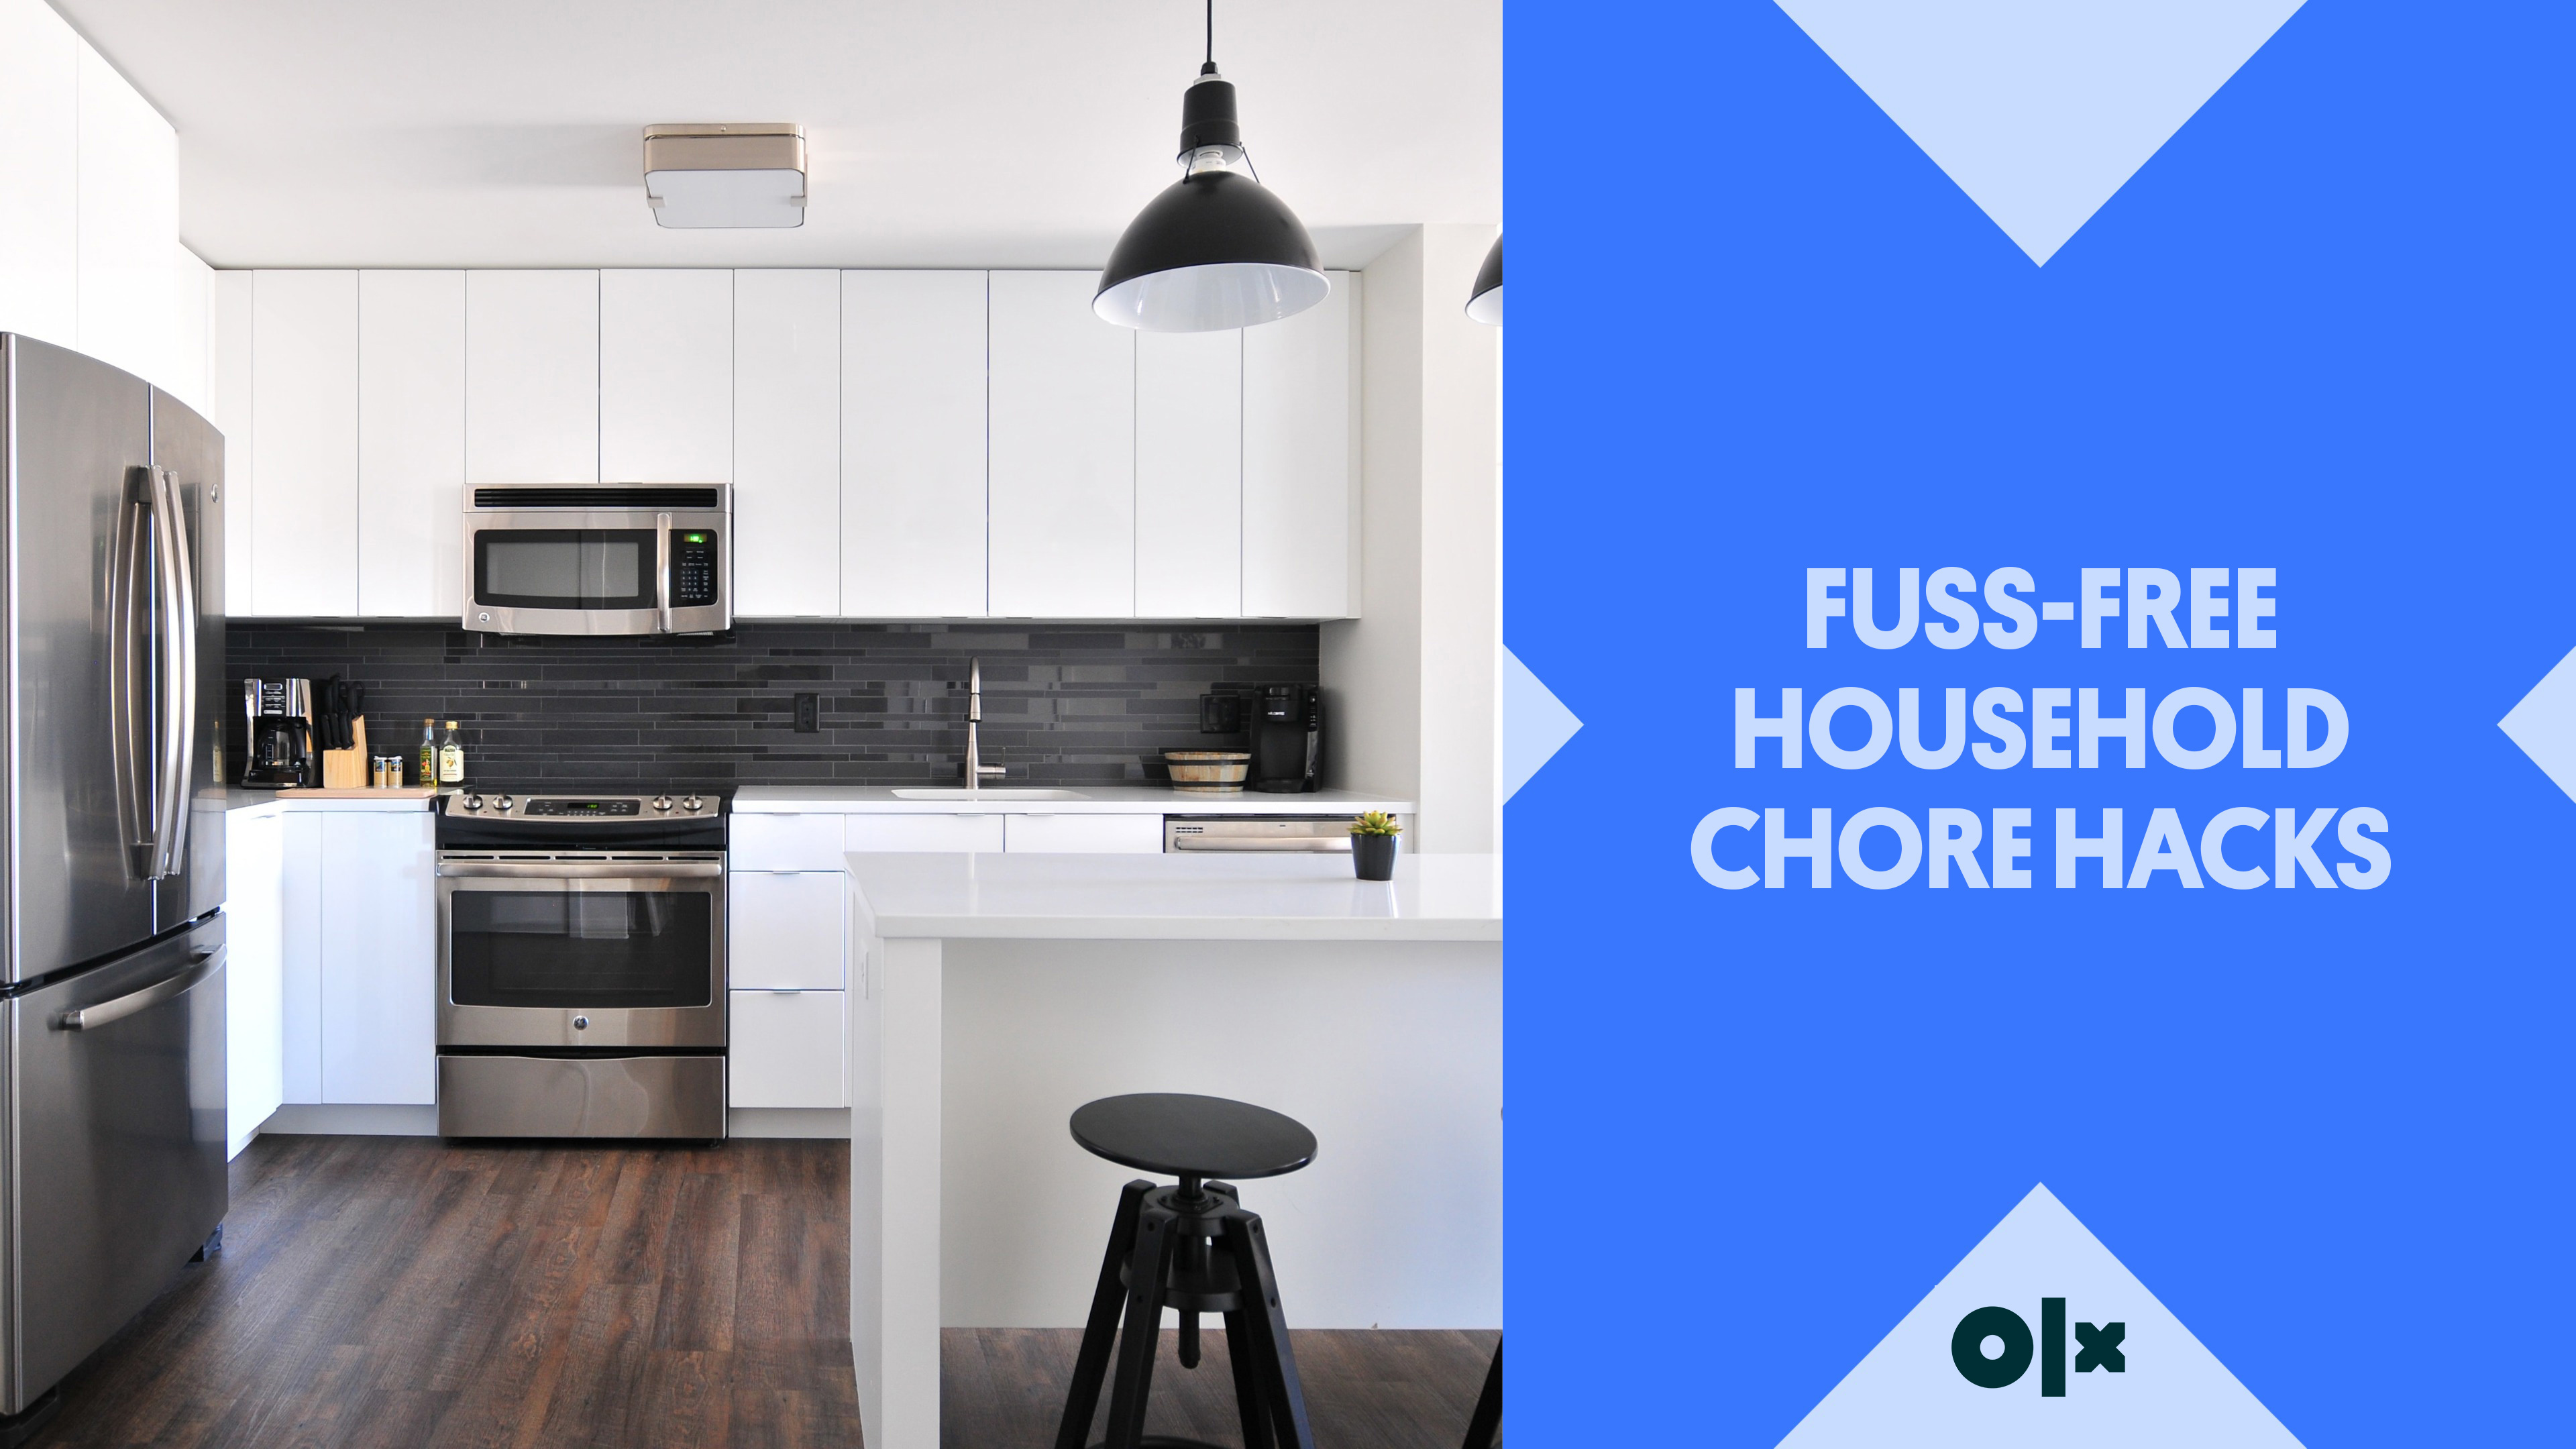 Fuss-free Household Chore Hacks!